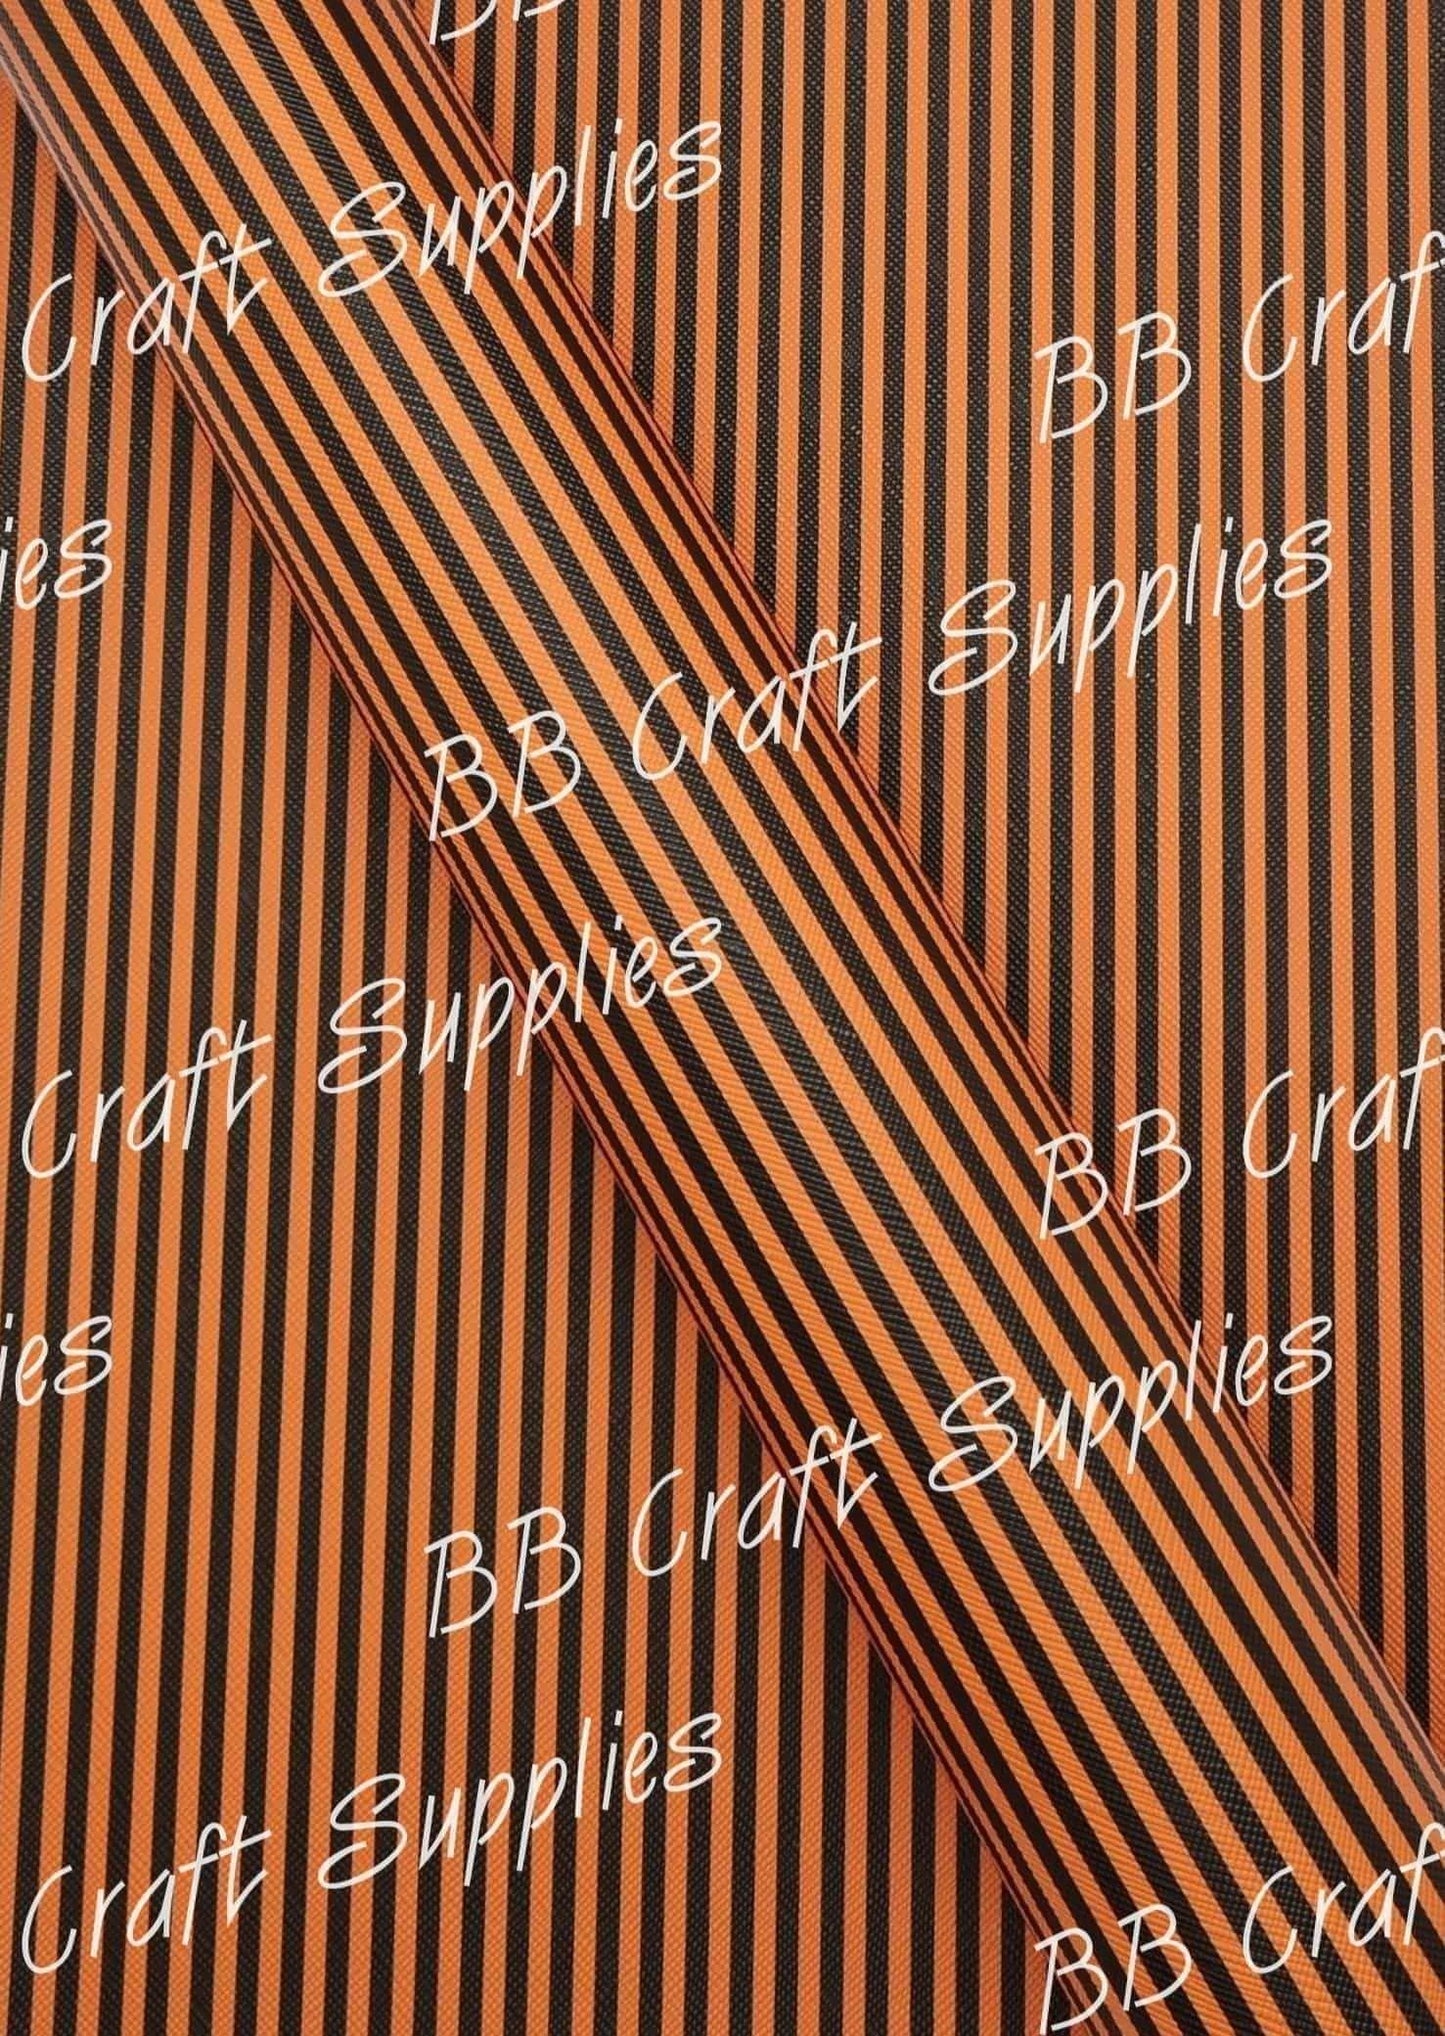 Orange Stripe Faux Leather - Faux, Faux Leather, Leather, leatherette, Orange, Stripe - Bare Butler Faux Leather Supplies 